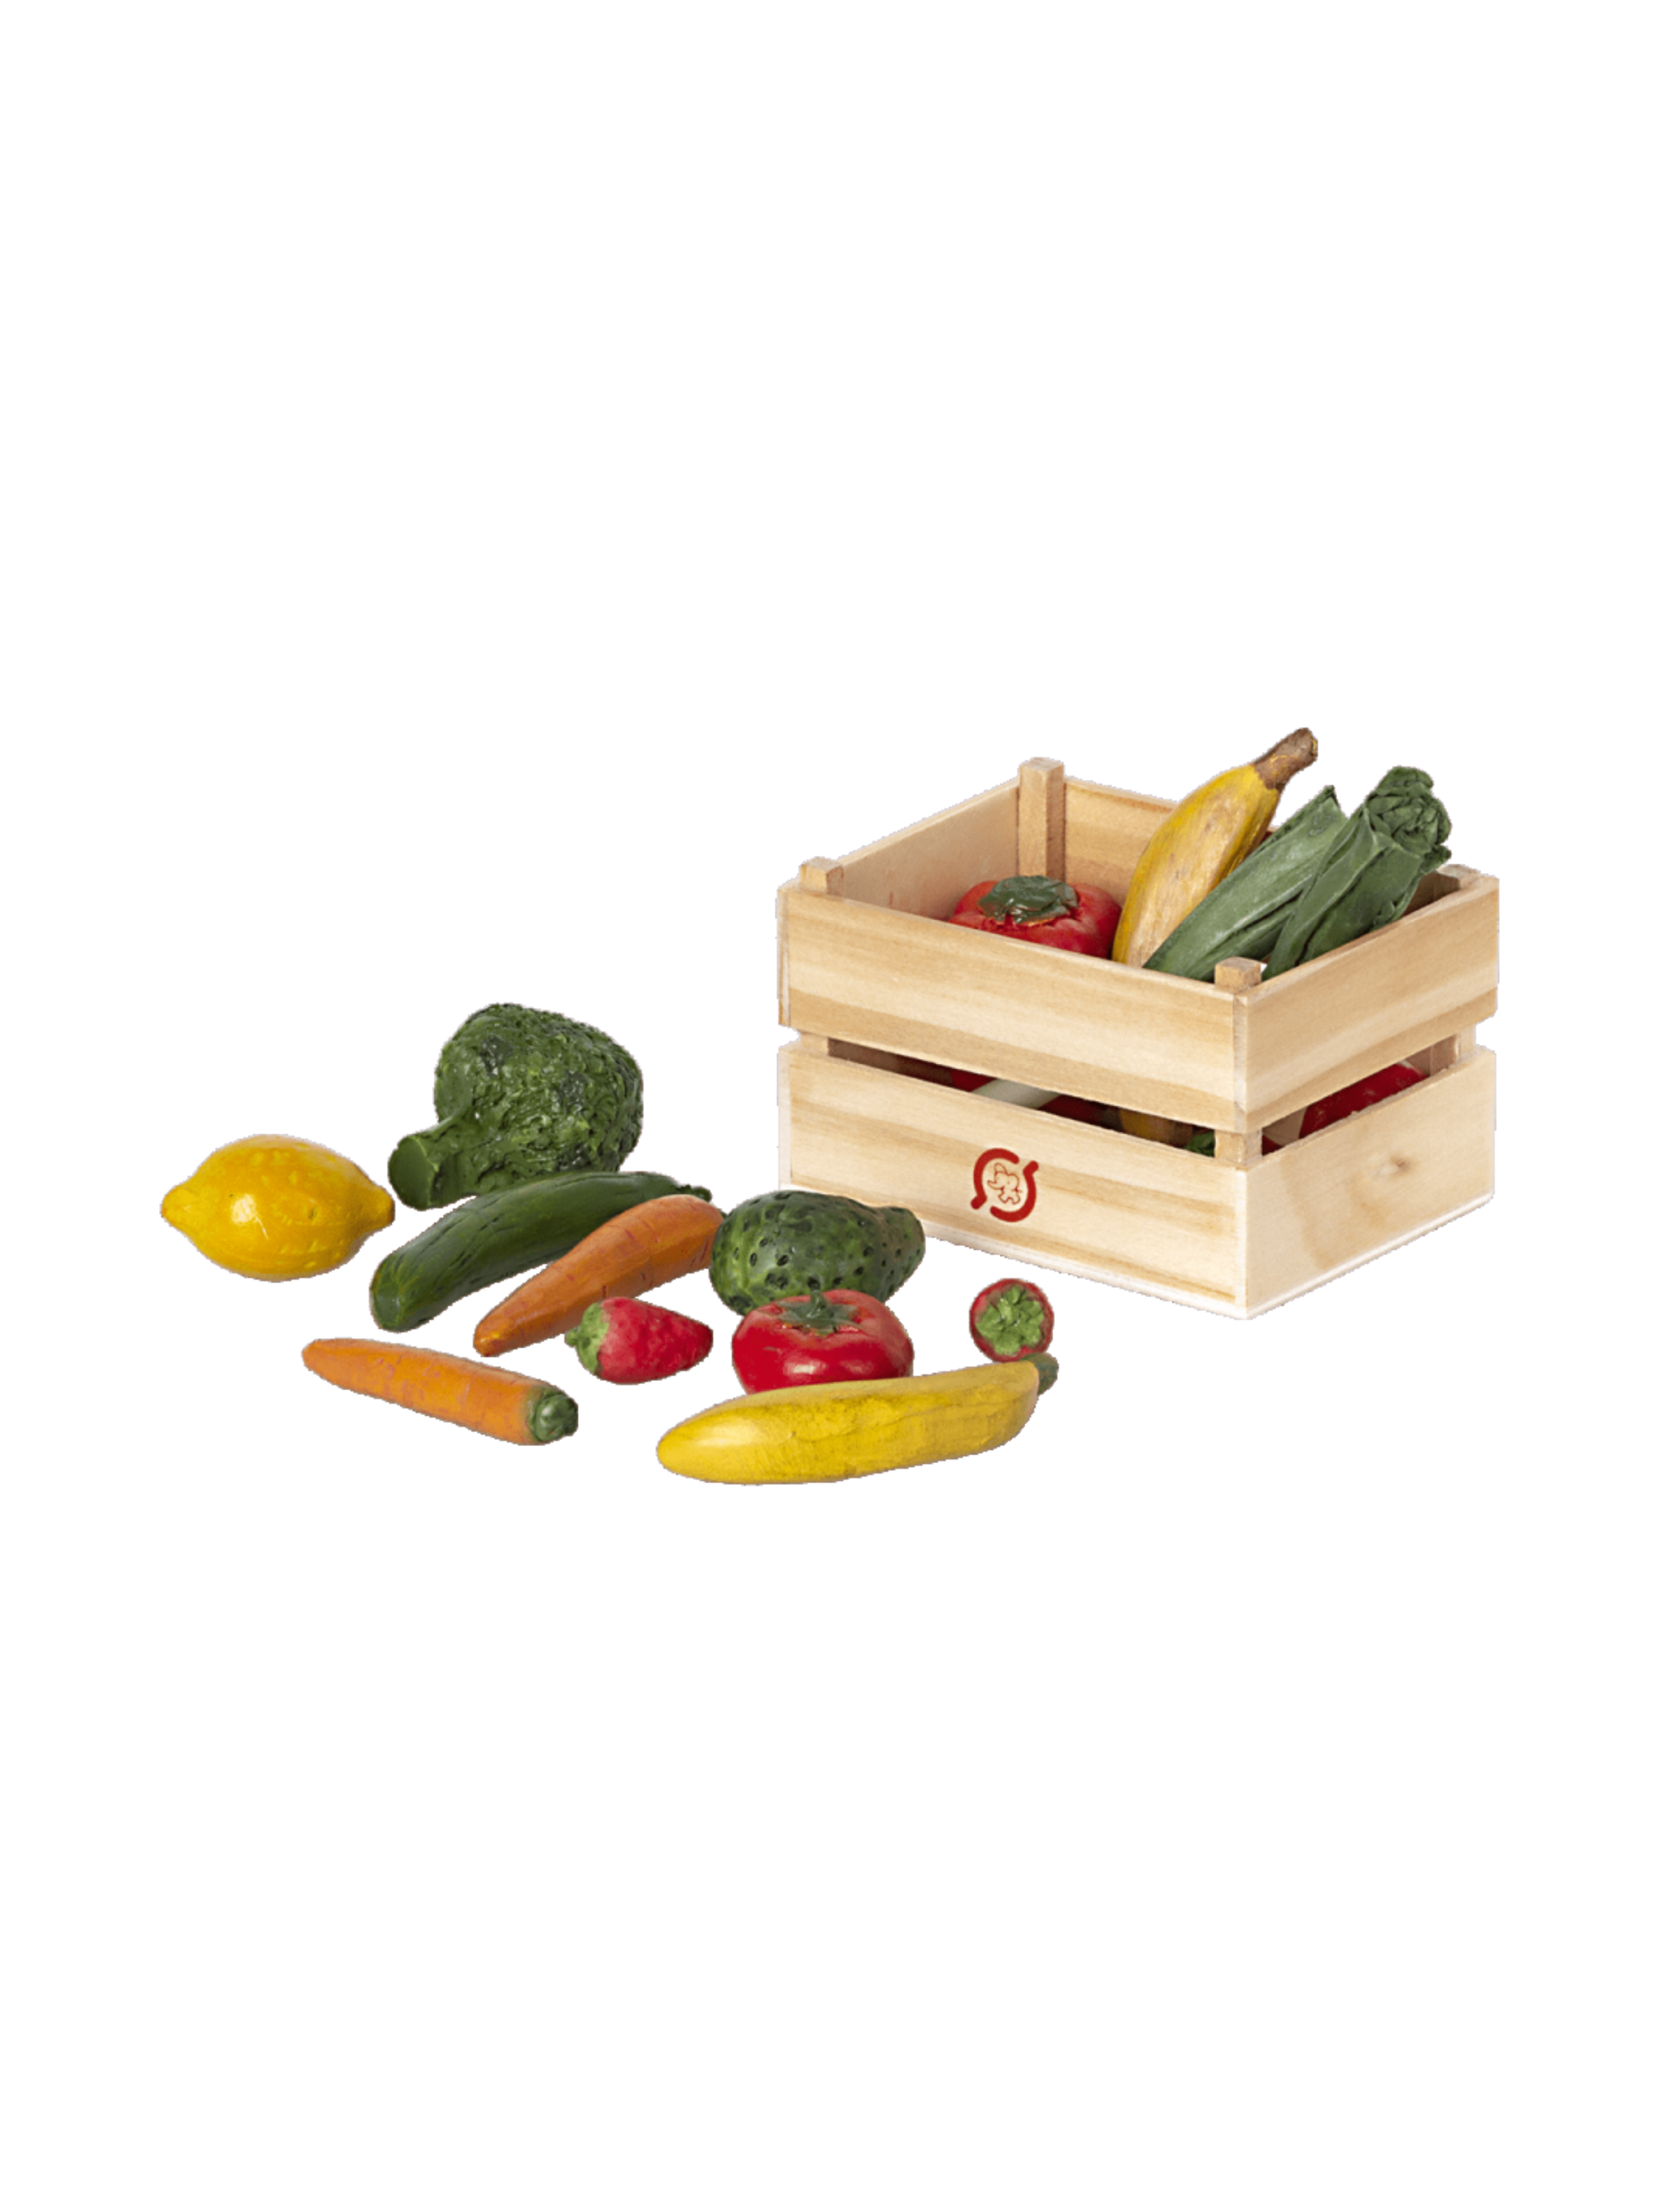 Maileg Miniature Fruits and Veggies: Dollhouse Kitchen Delight